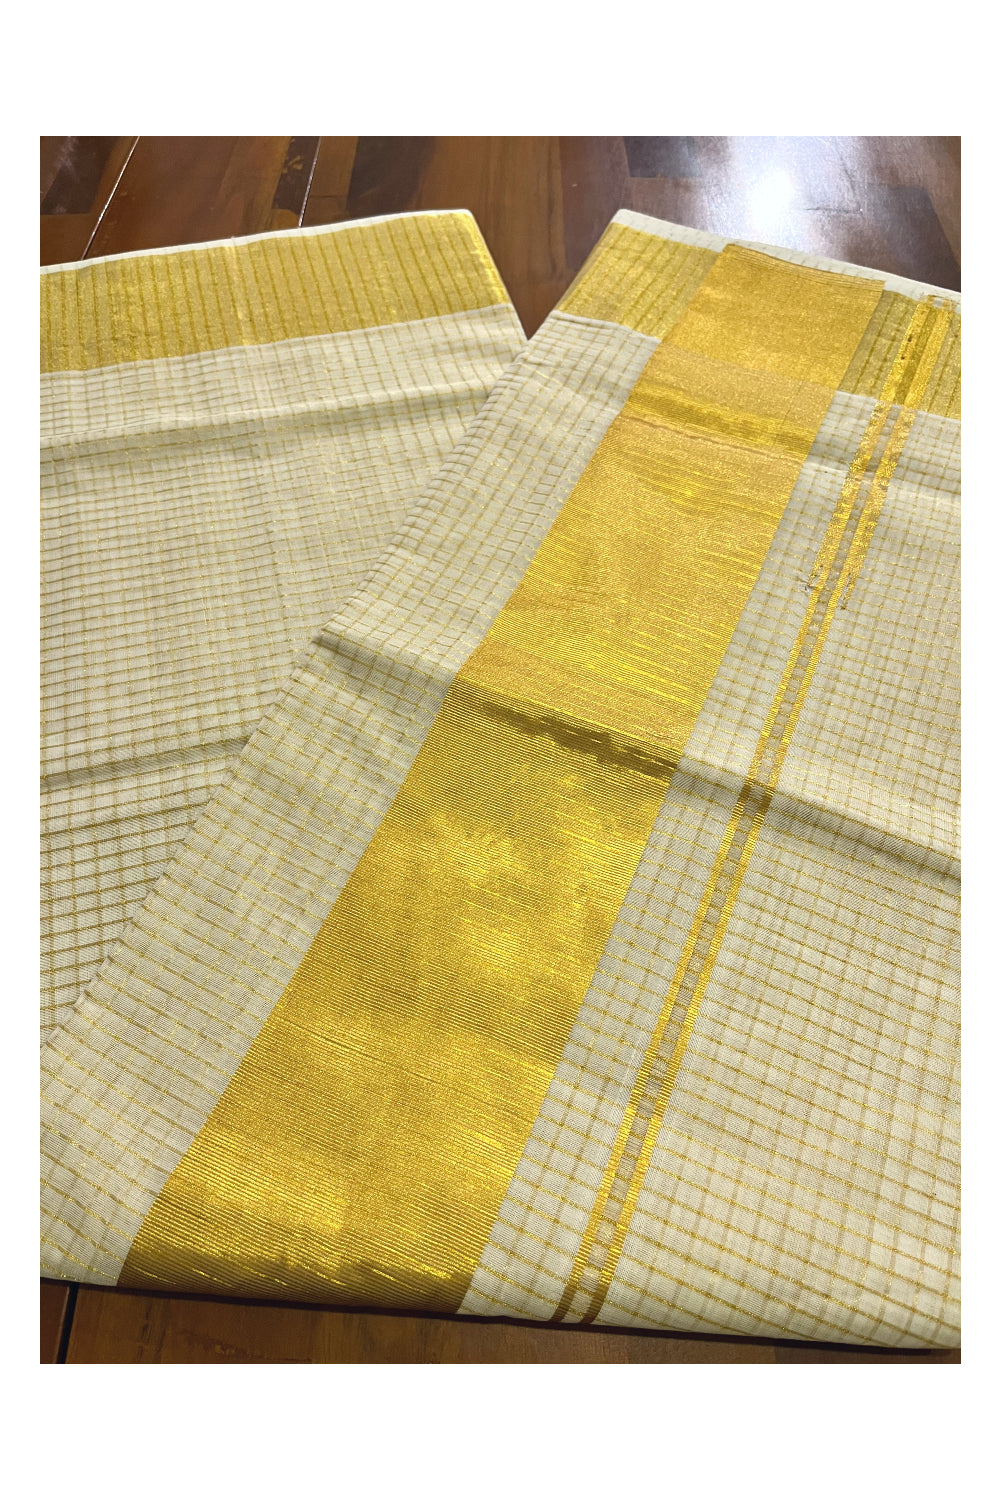 Southloom Handloom Premium Kerala Cotton Saree with Kasavu Micro Check Design Body